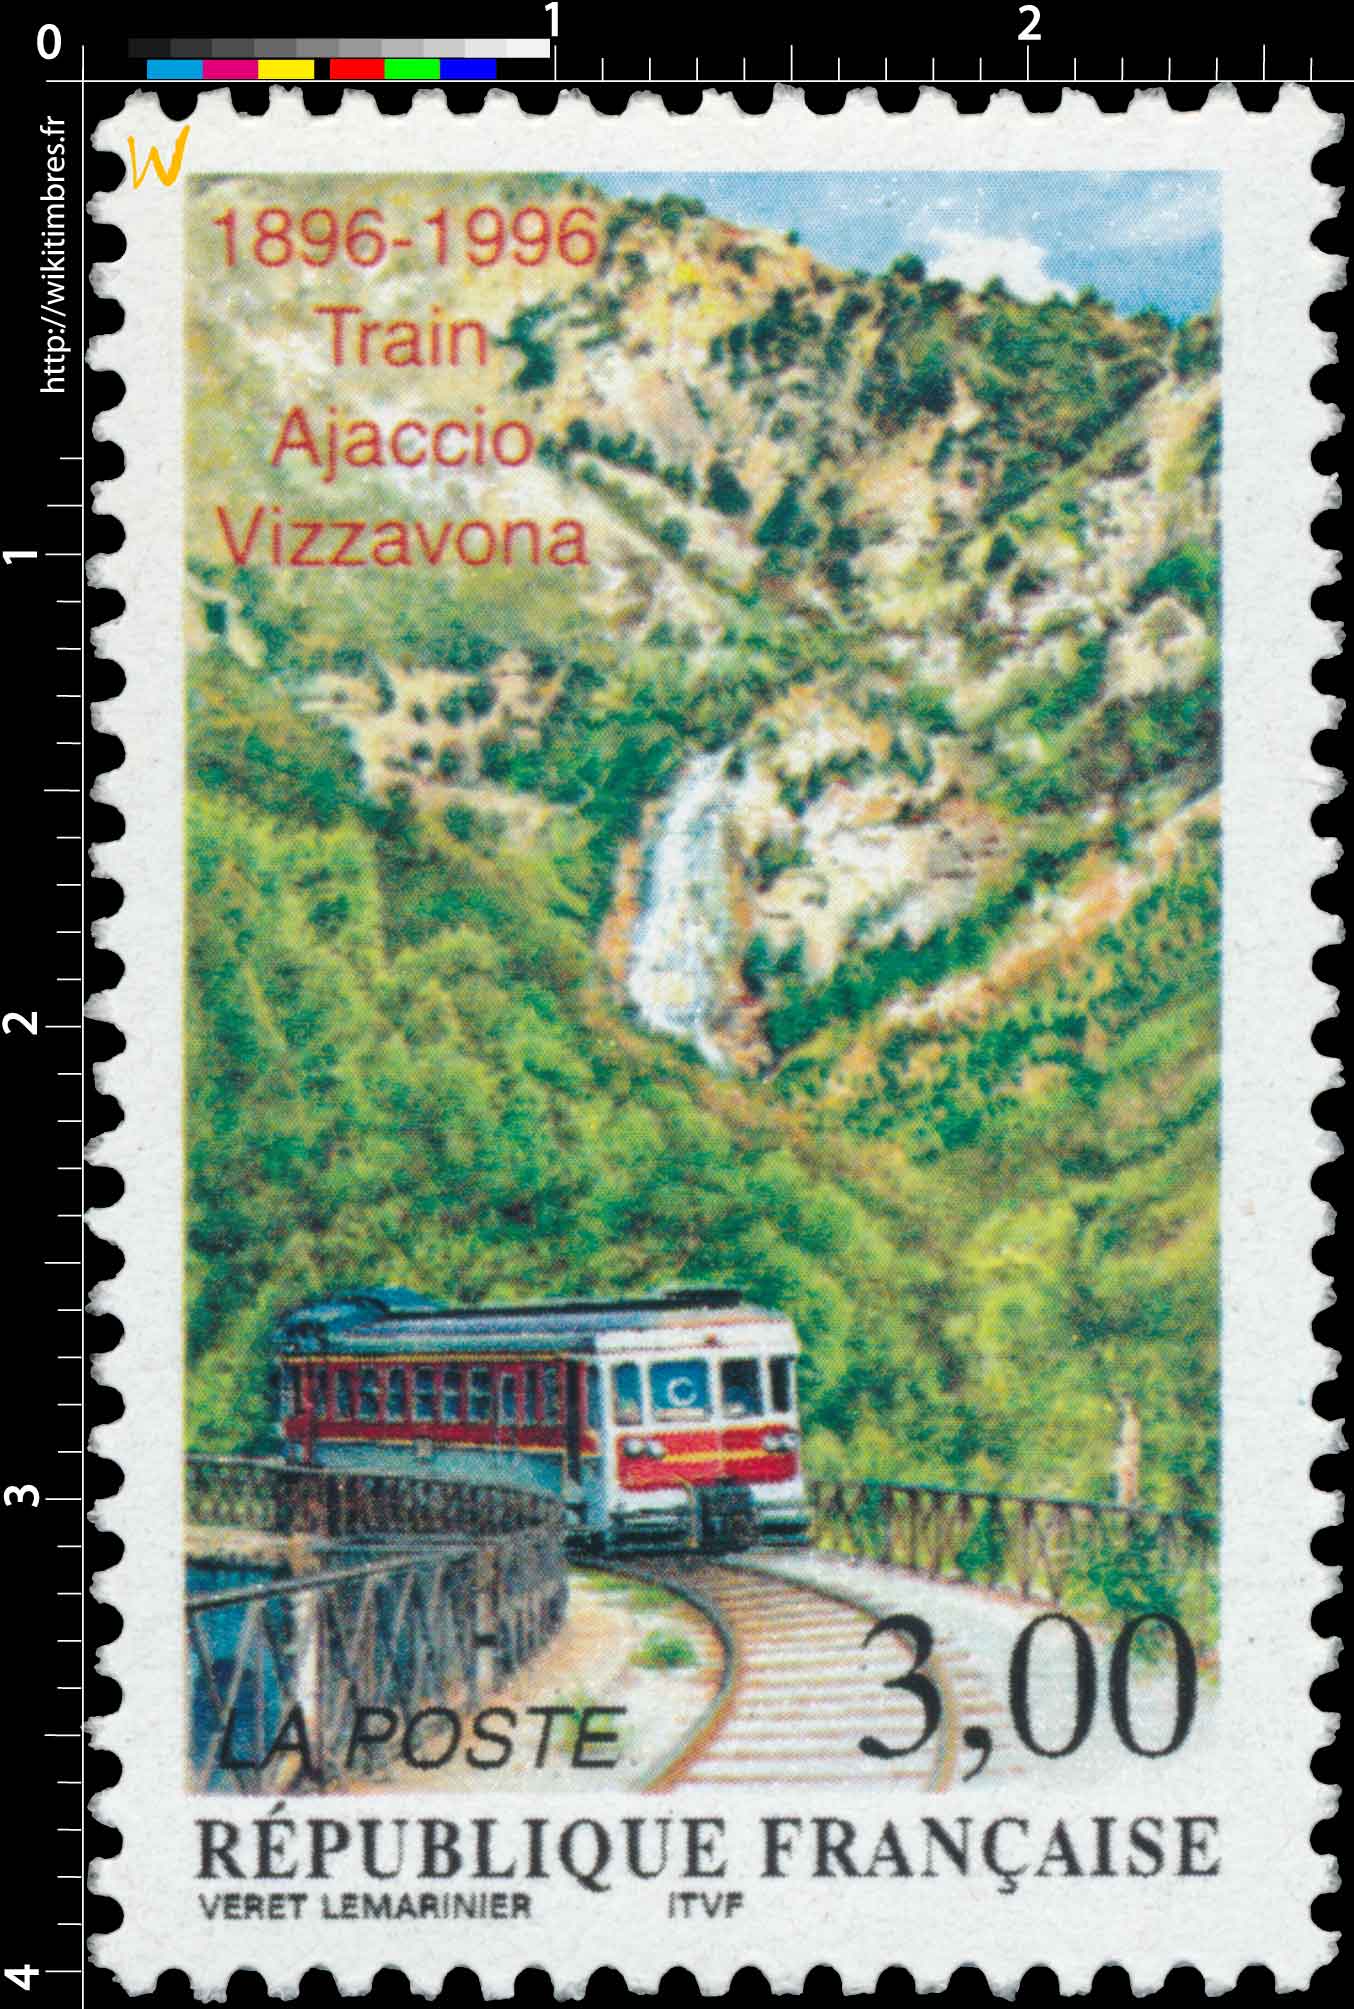 1996 Train Ajaccio-Vizzavona 1896-1996